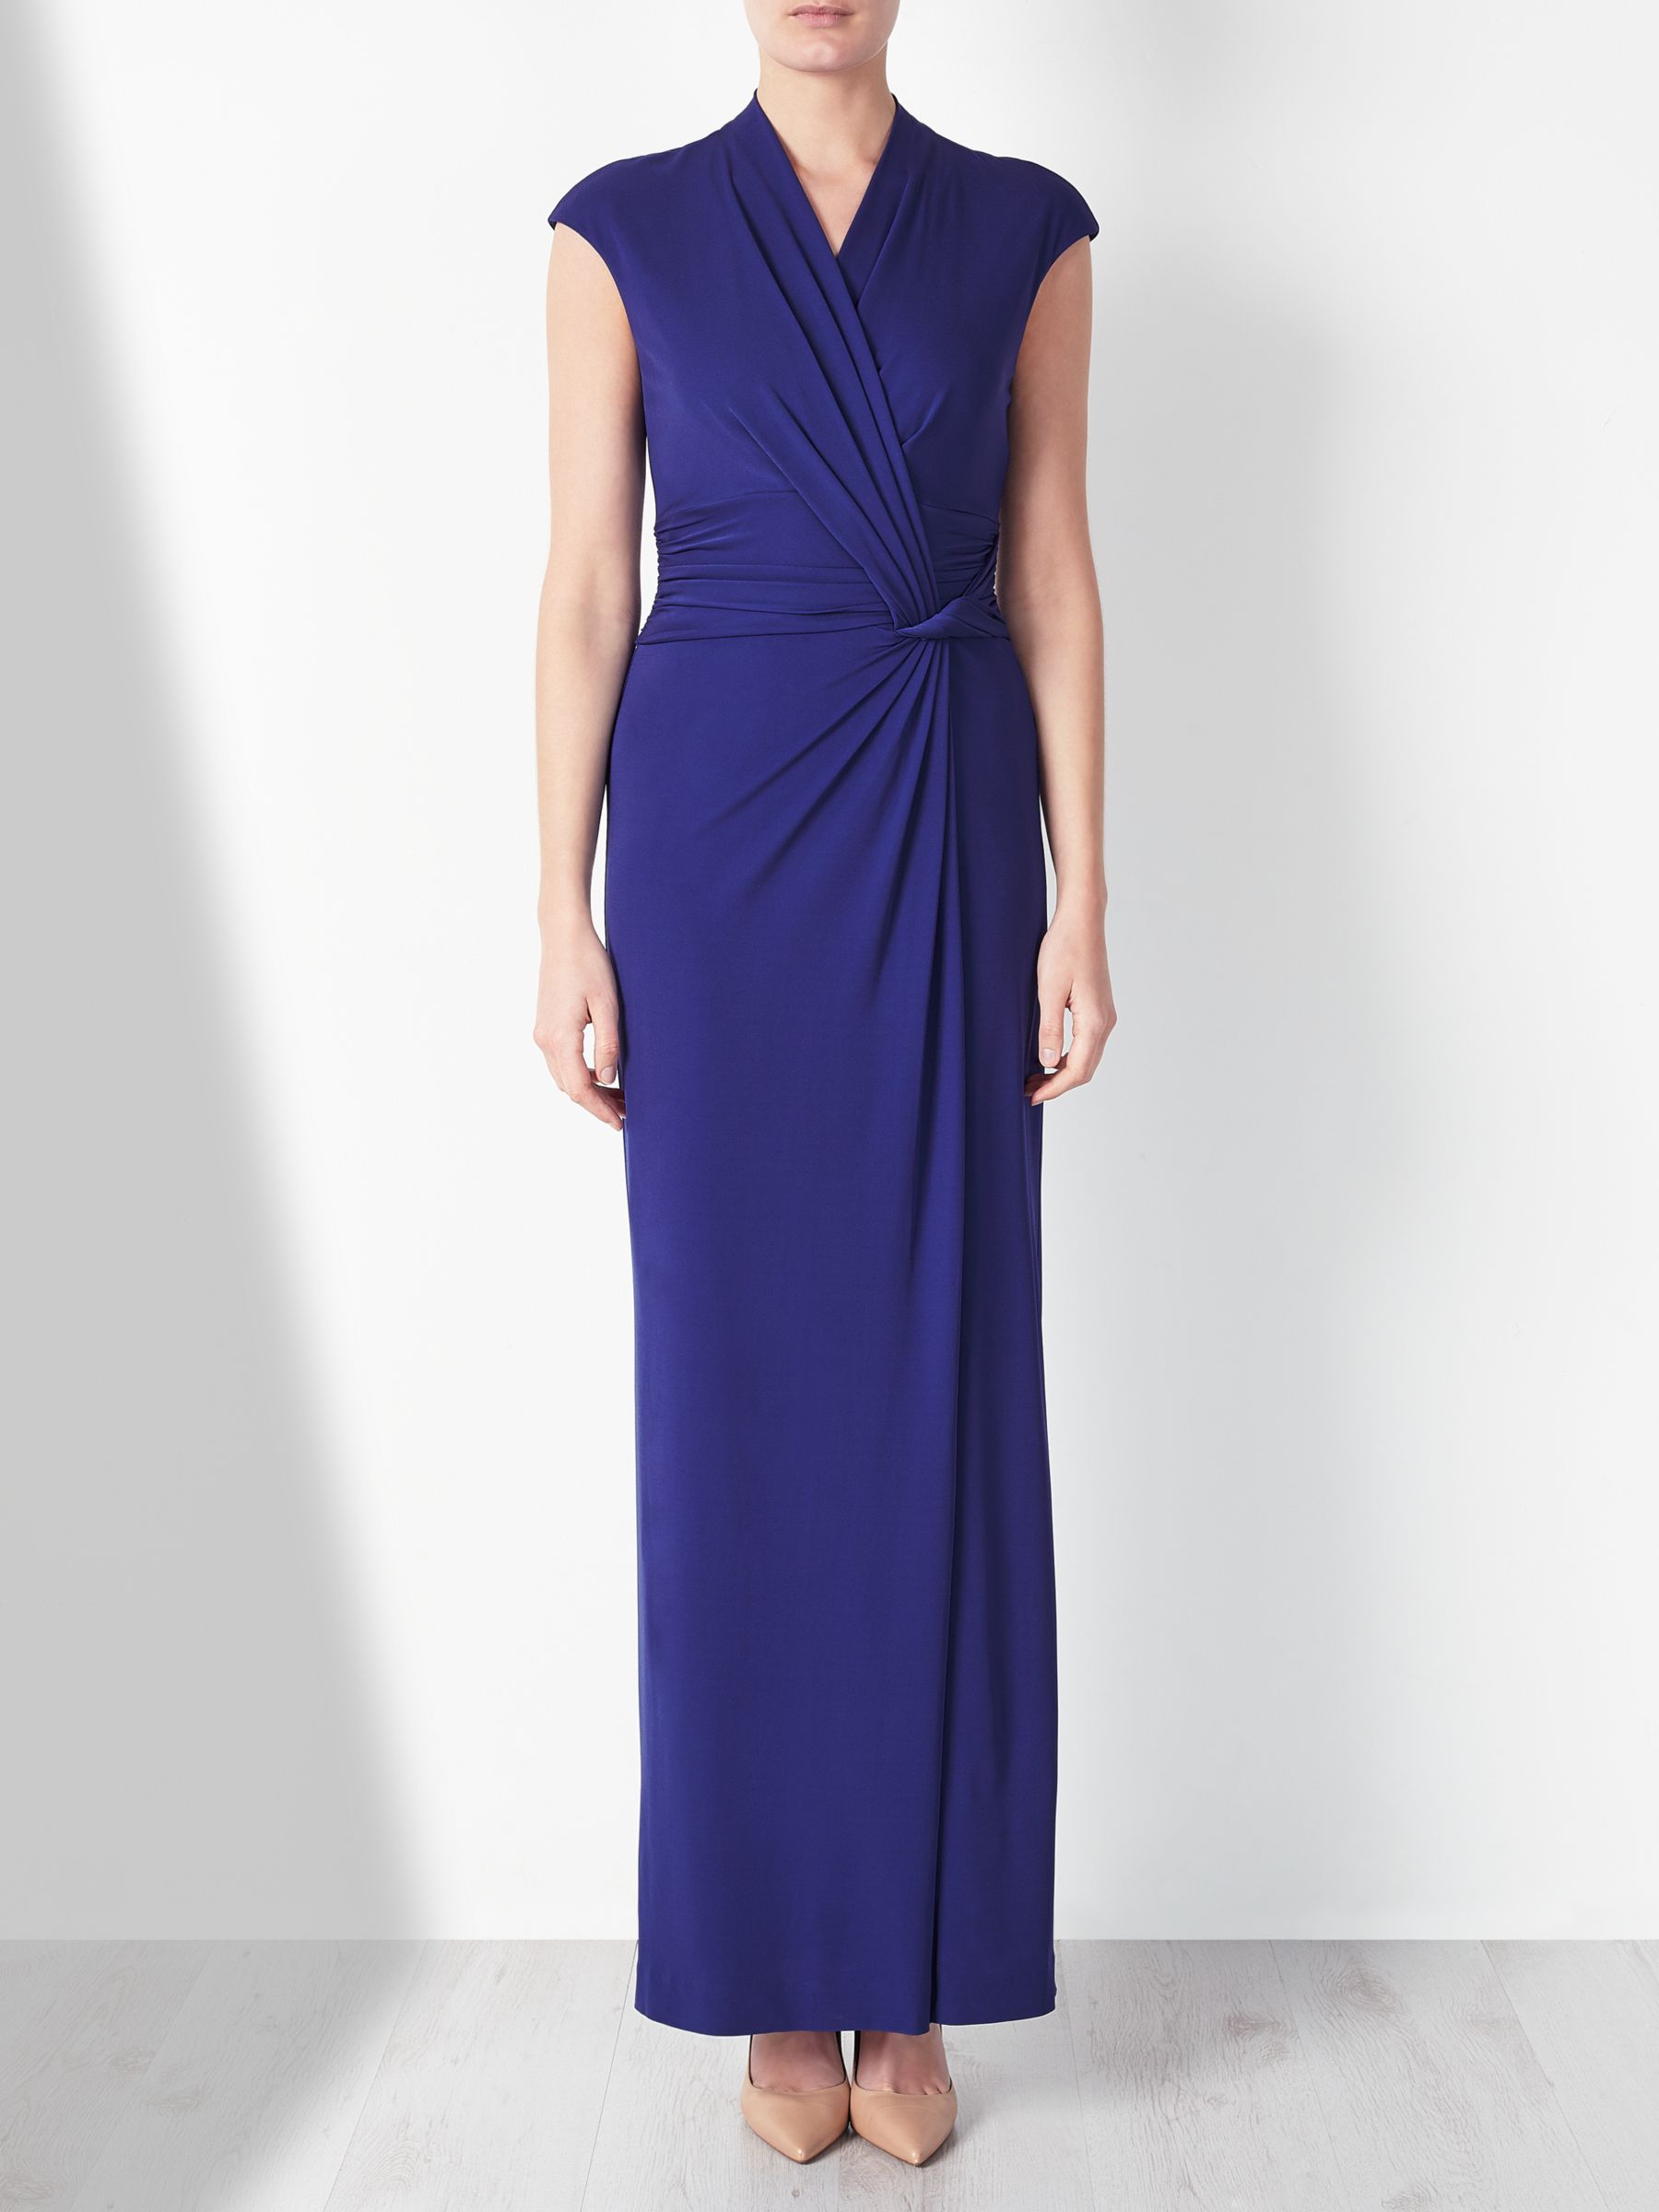 John Lewis & Partners Draped Twist Waist Dress, Blue, 12